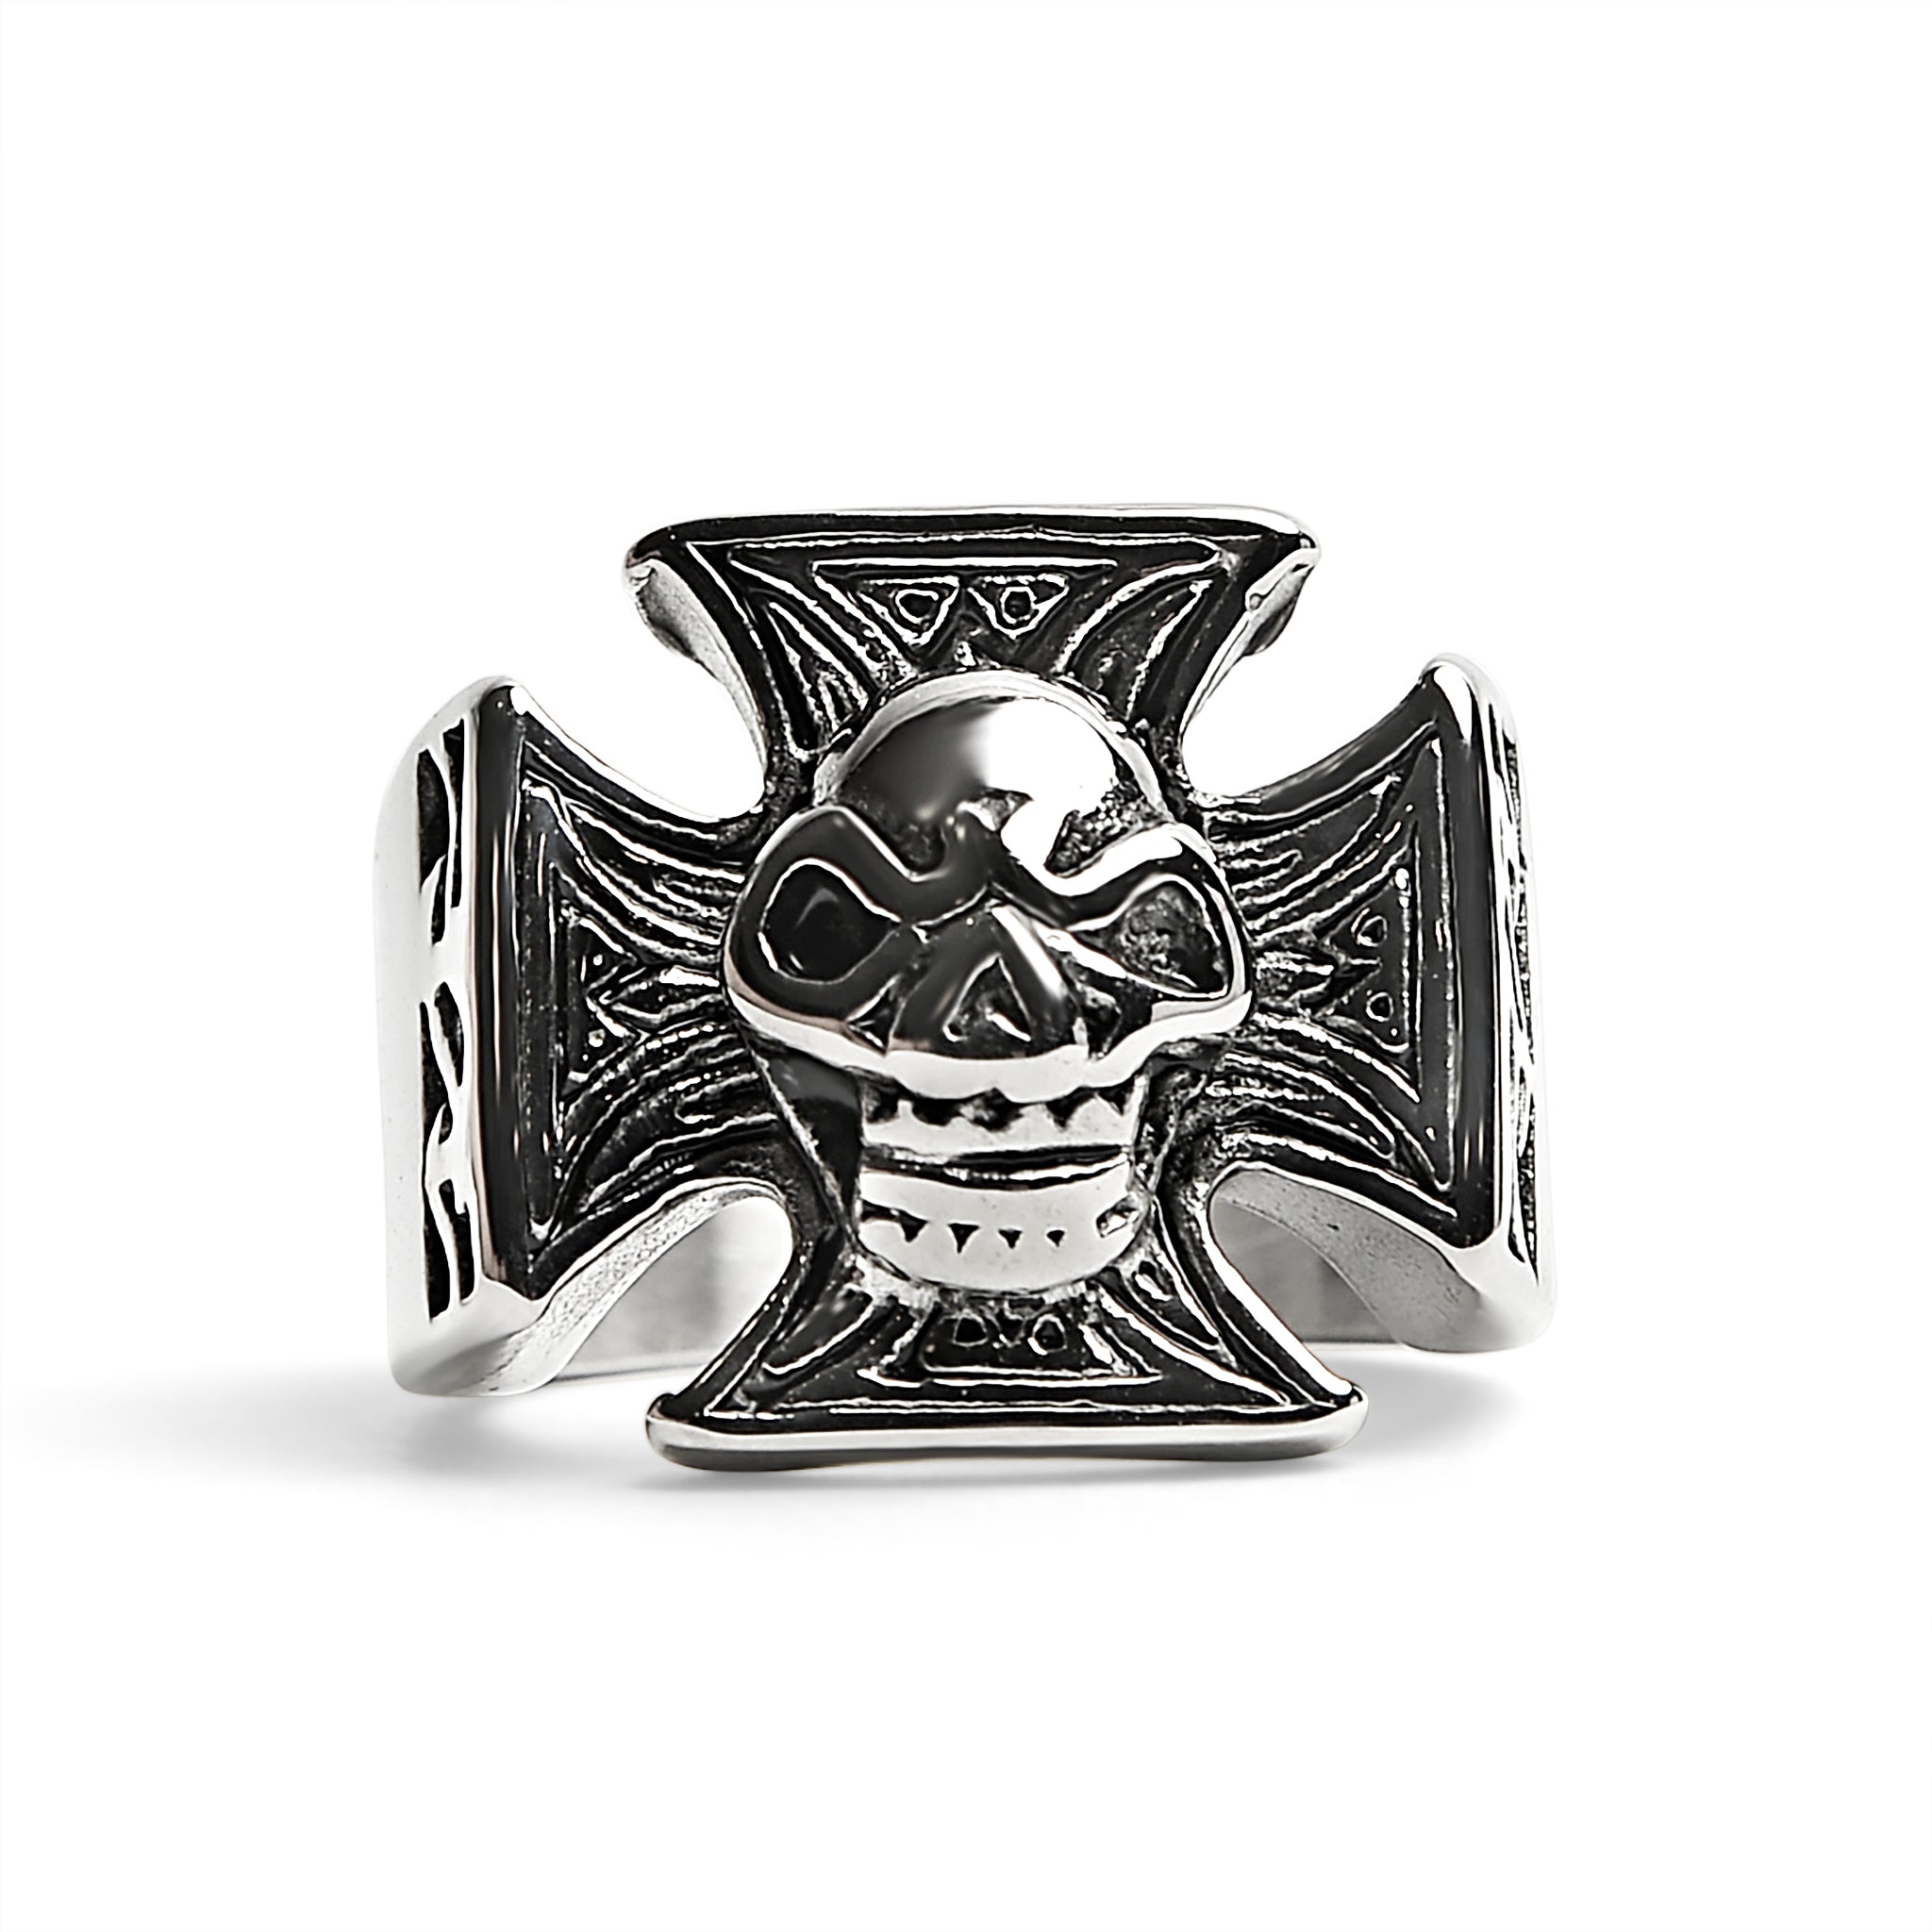 Stainless Steel Polished Skull Maltese Cross Ring - Bold Biker Statement Piece - Jewelry & Watches - Bijou Her -  -  - 